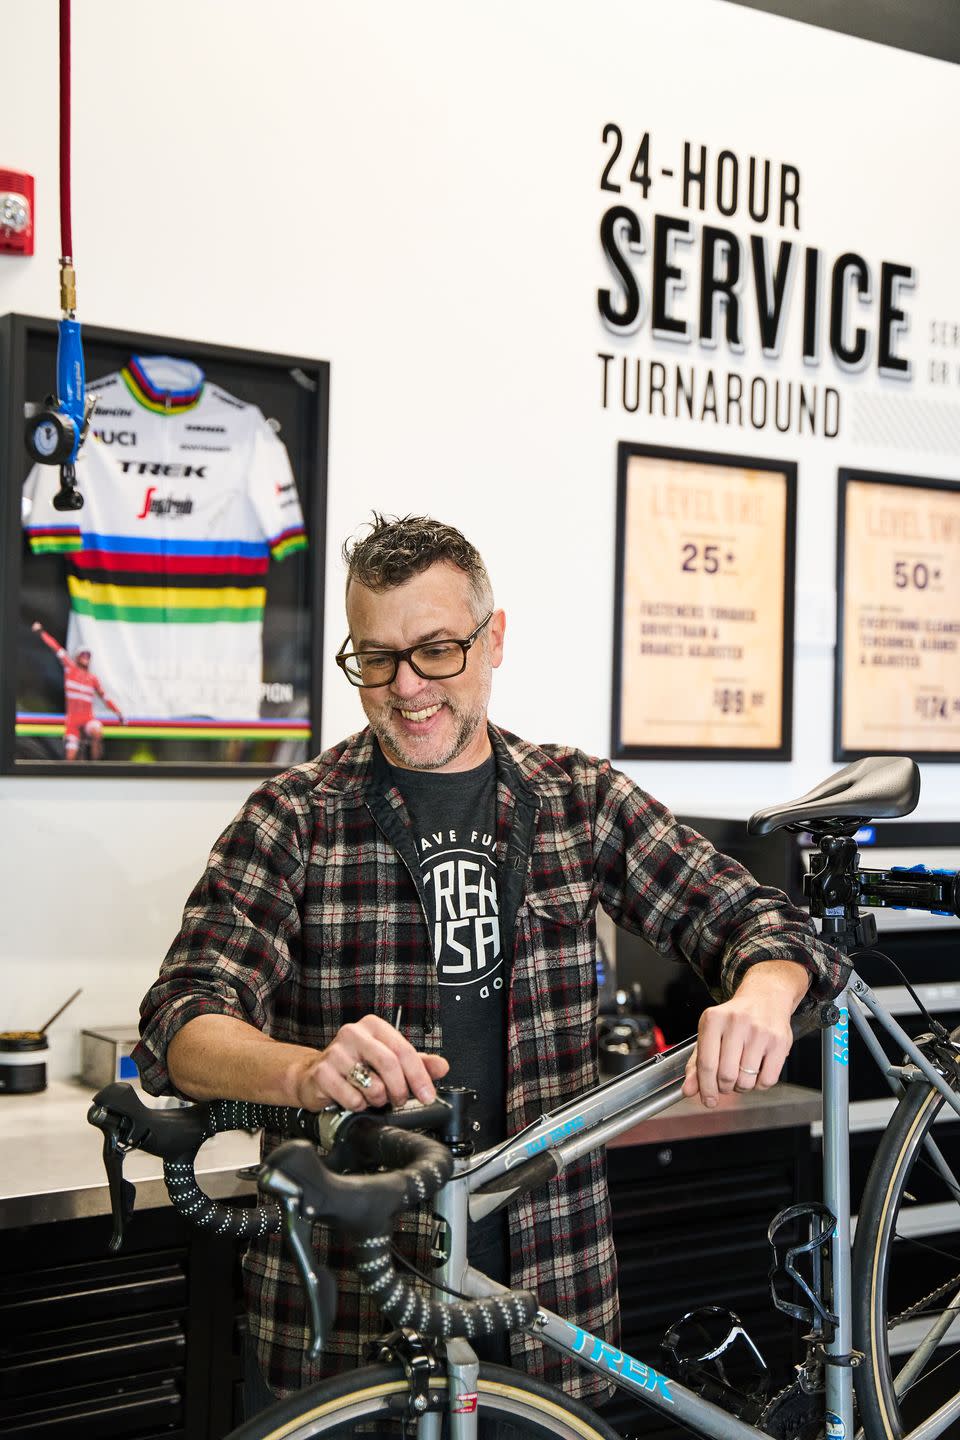 mark taylor working on bike in shop